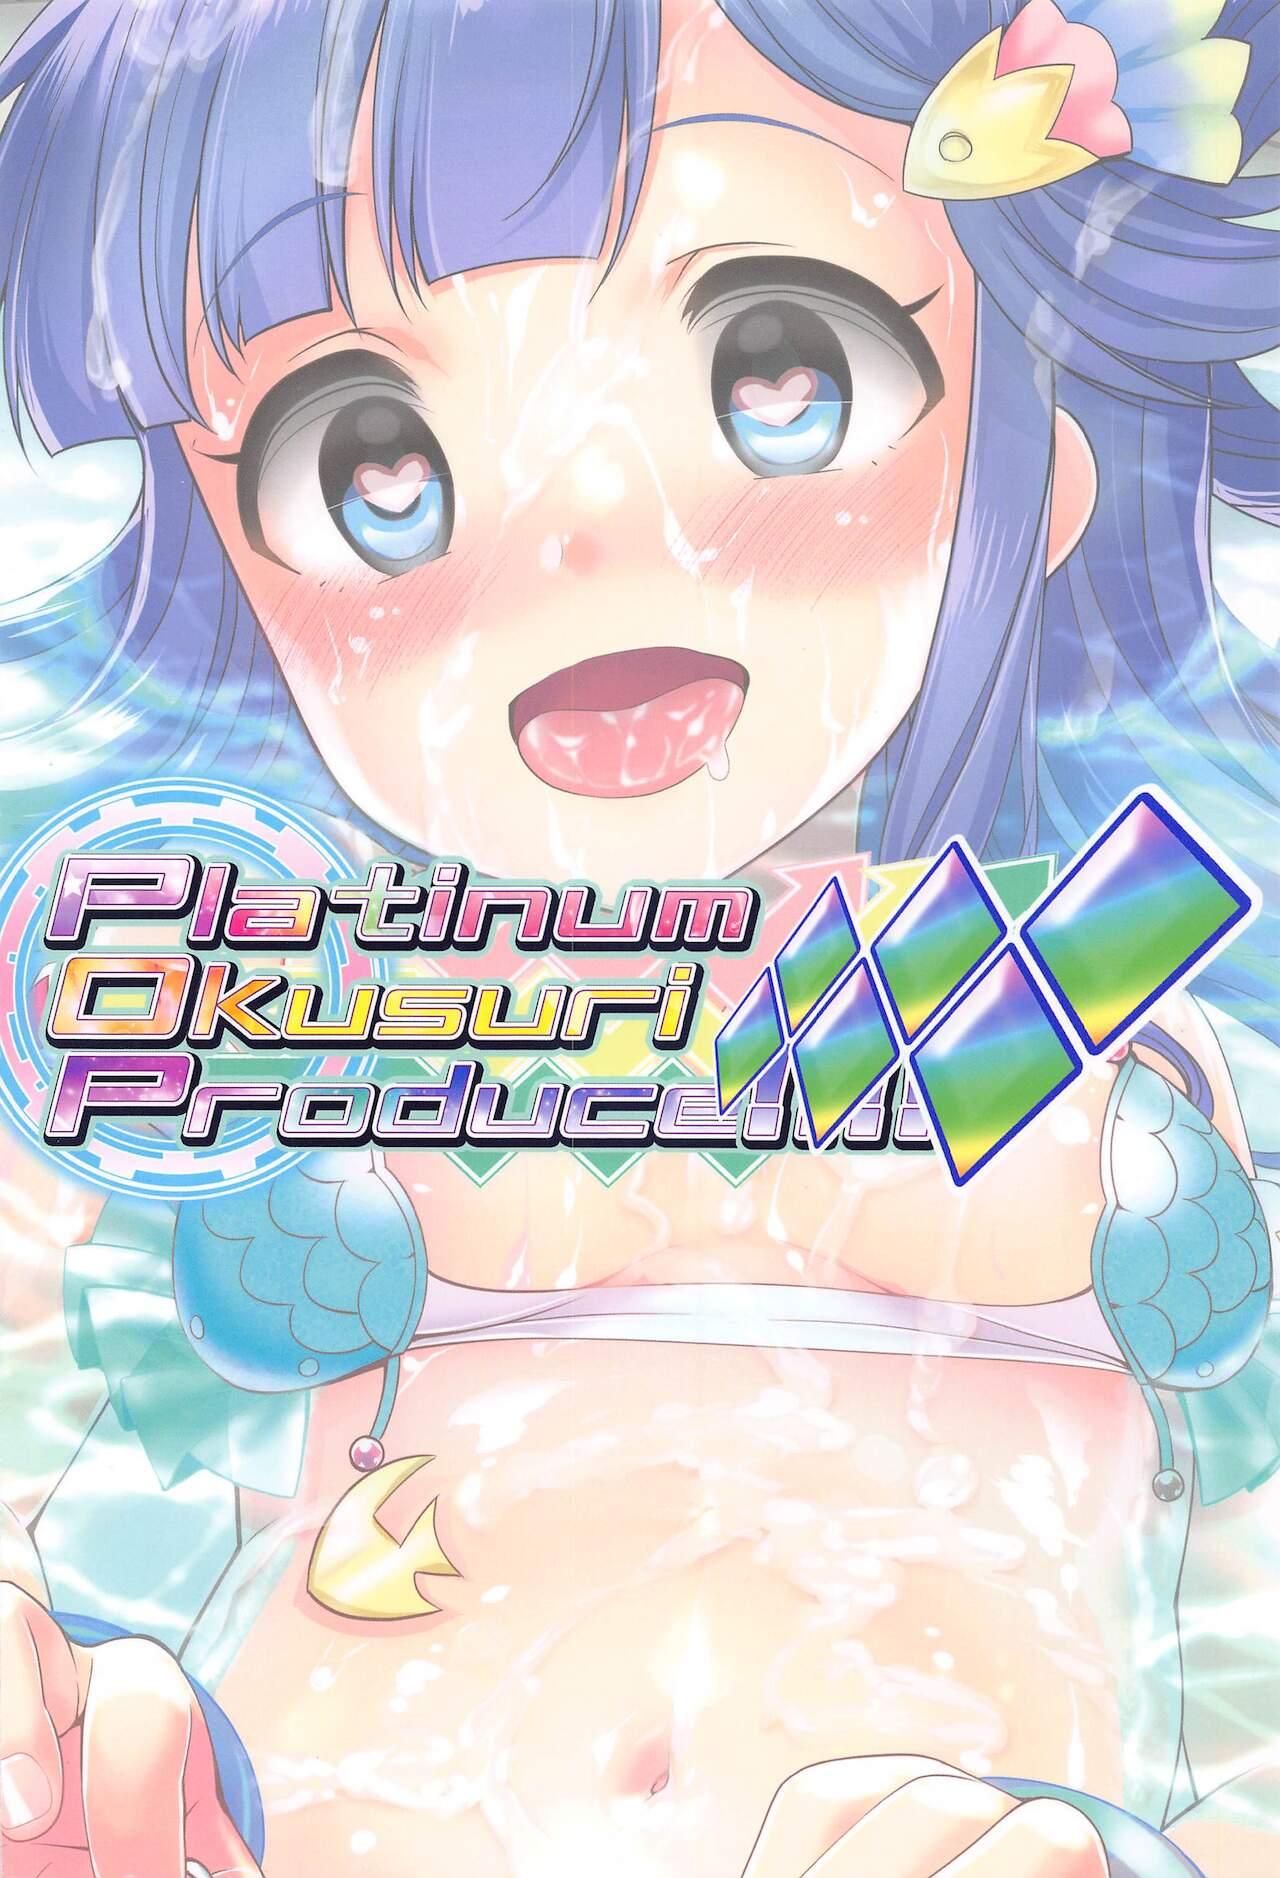 Platinum Okusuri Produce!!!! ◇◇◇◇◇◇ 17